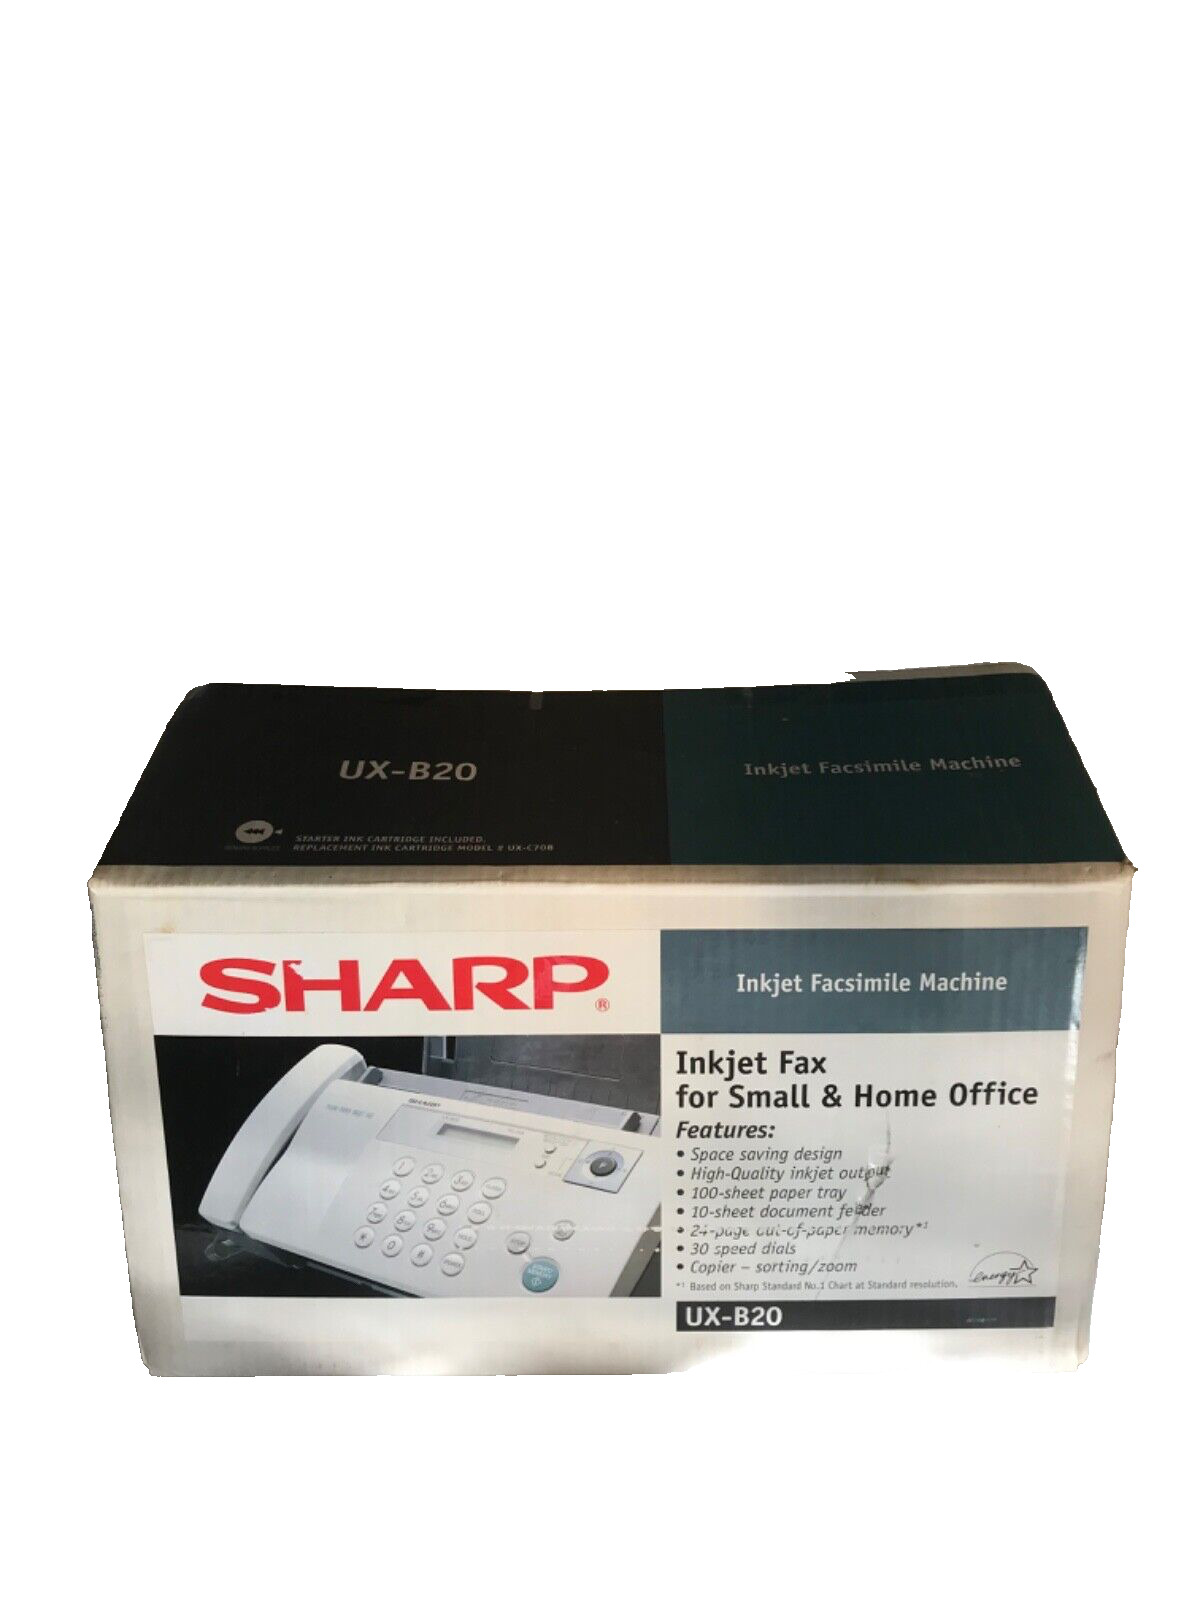 New Open Box Vintage Sharp Corp UX-B20 Inkjet Facsimile Machine Complete OG Box